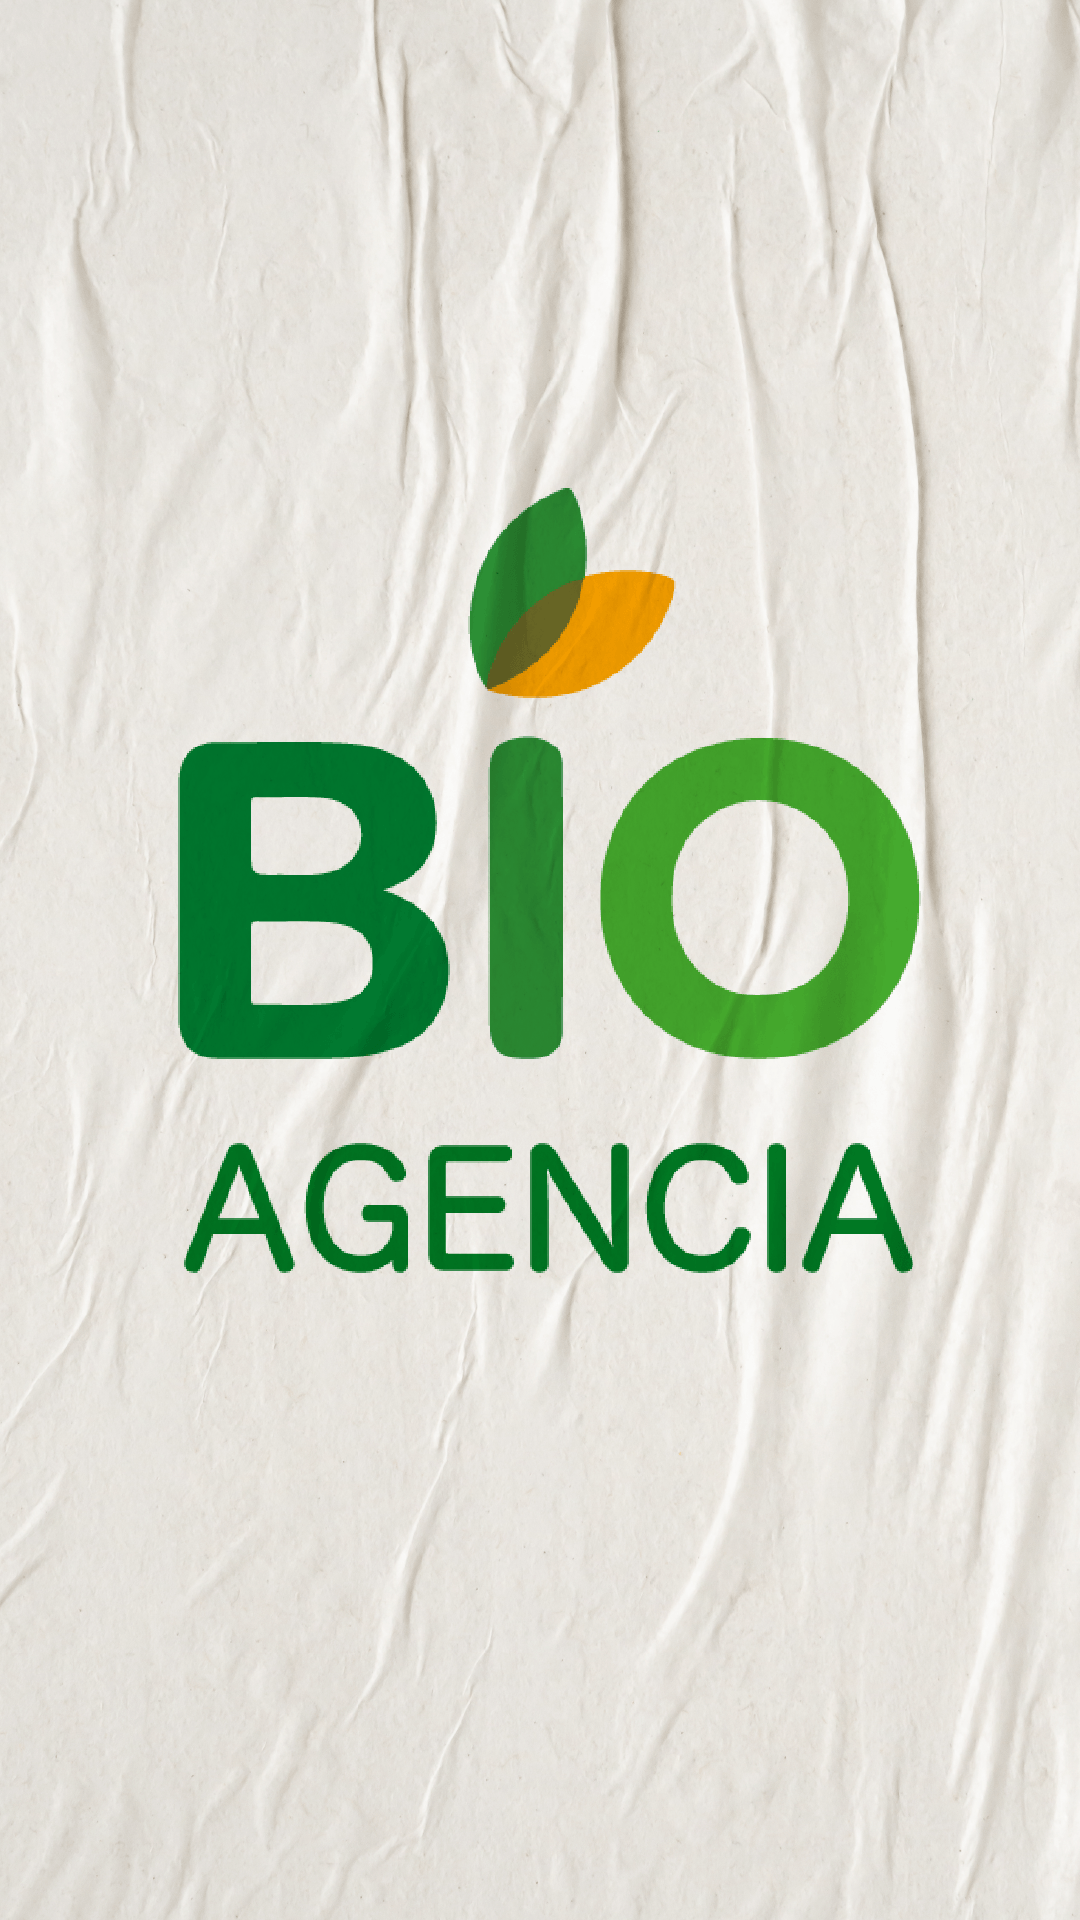 bioagencia 8